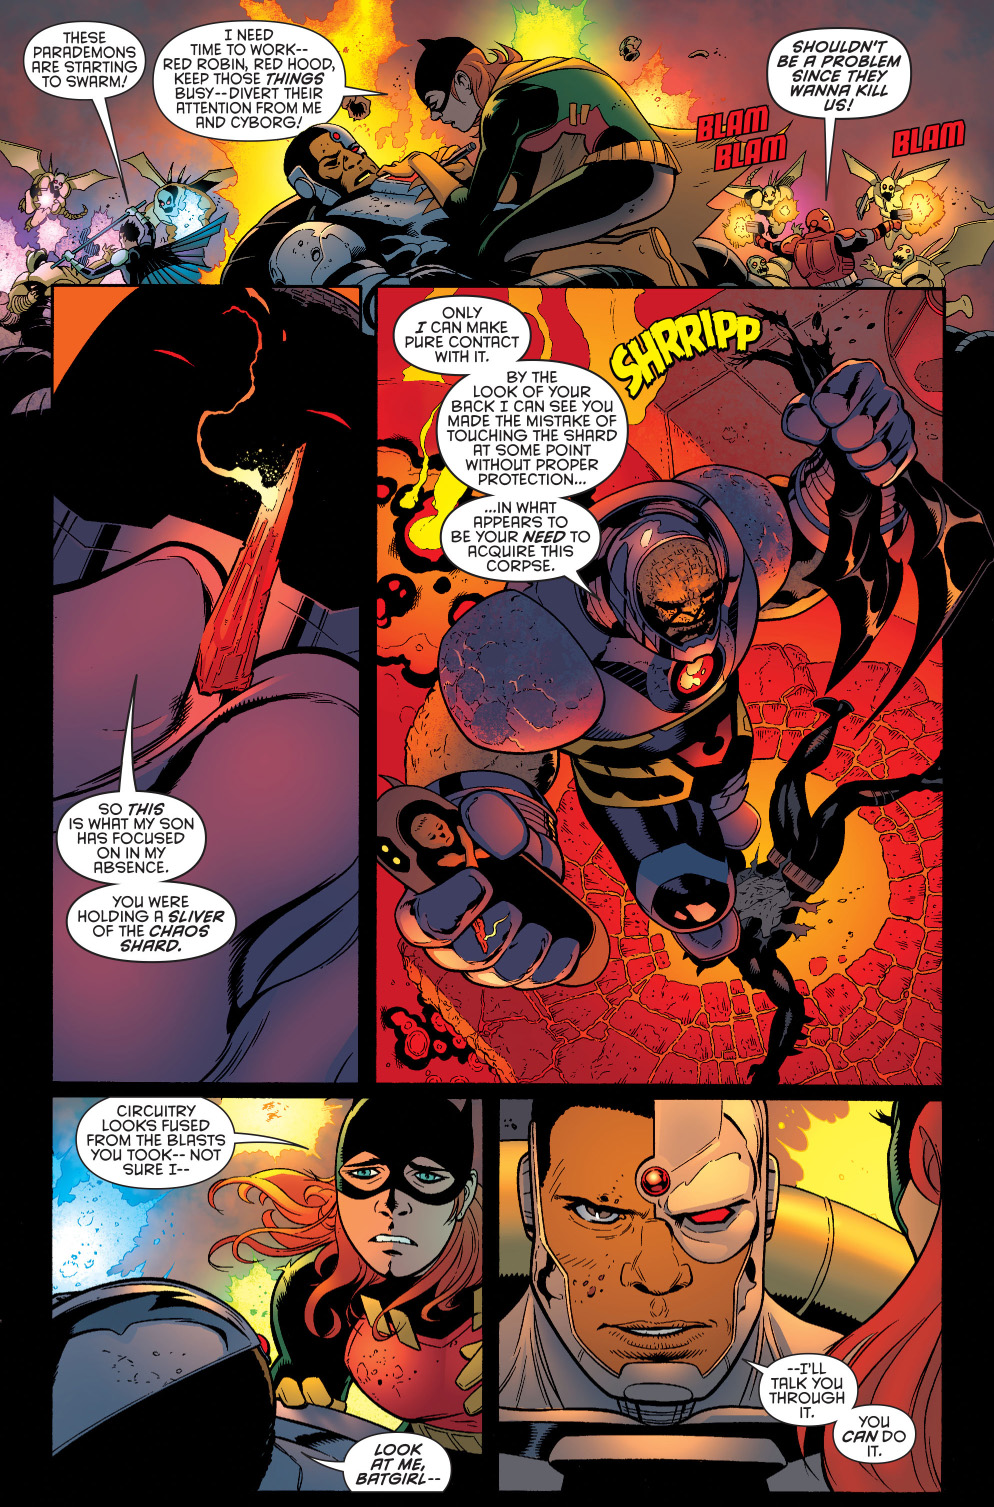 Batman In Hellbat Armor VS Darkseid – Comicnewbies